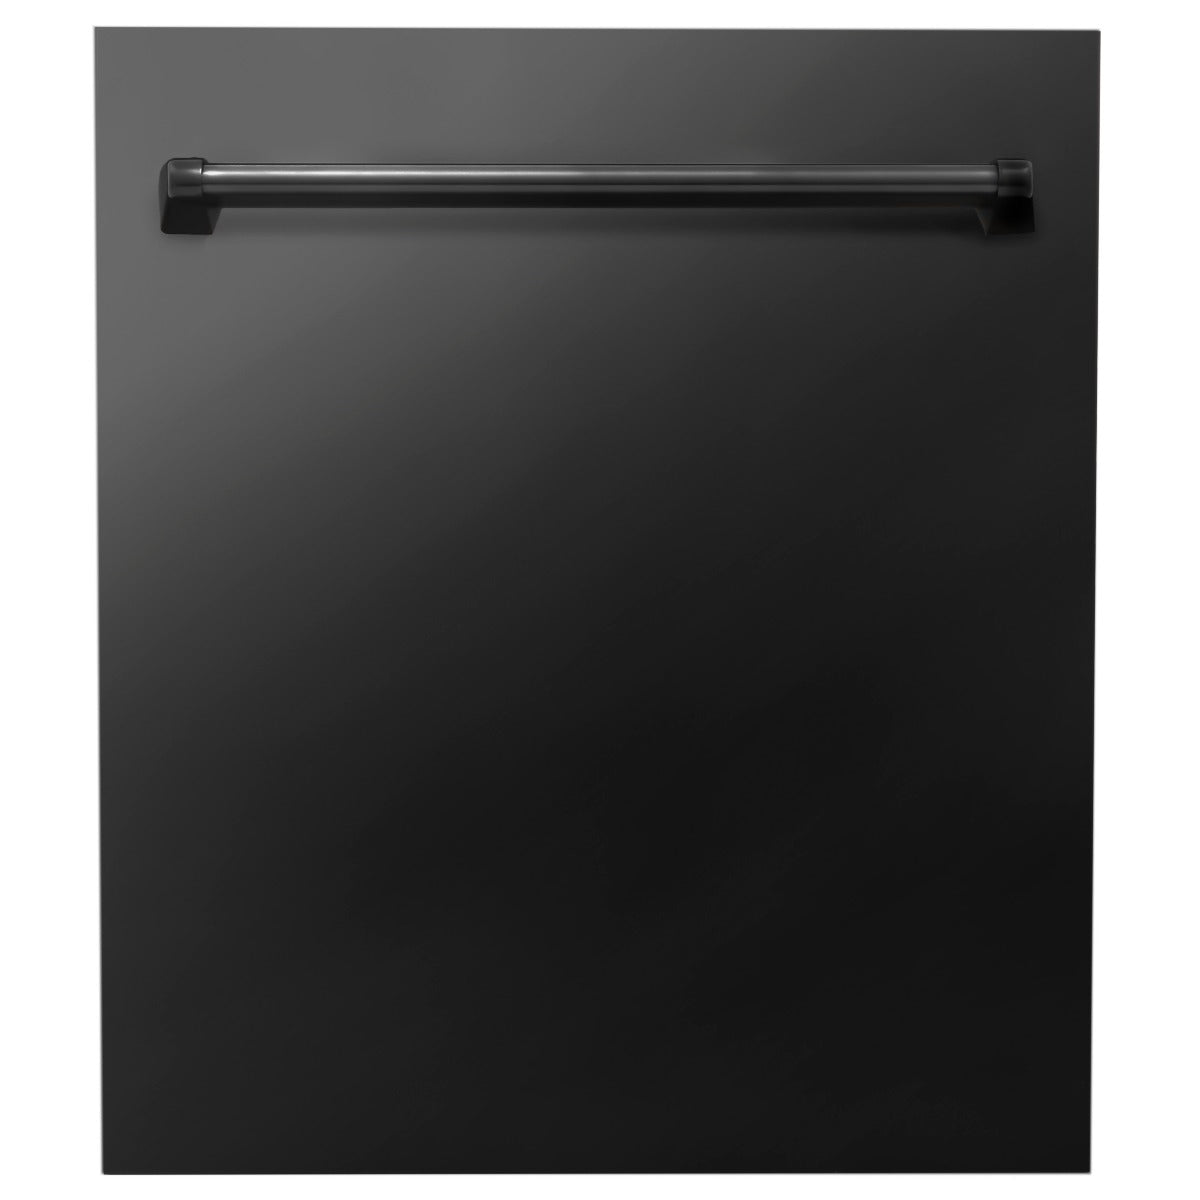 ZLINE 24 in. Top Control Dishwasher in Black Stainless Steel